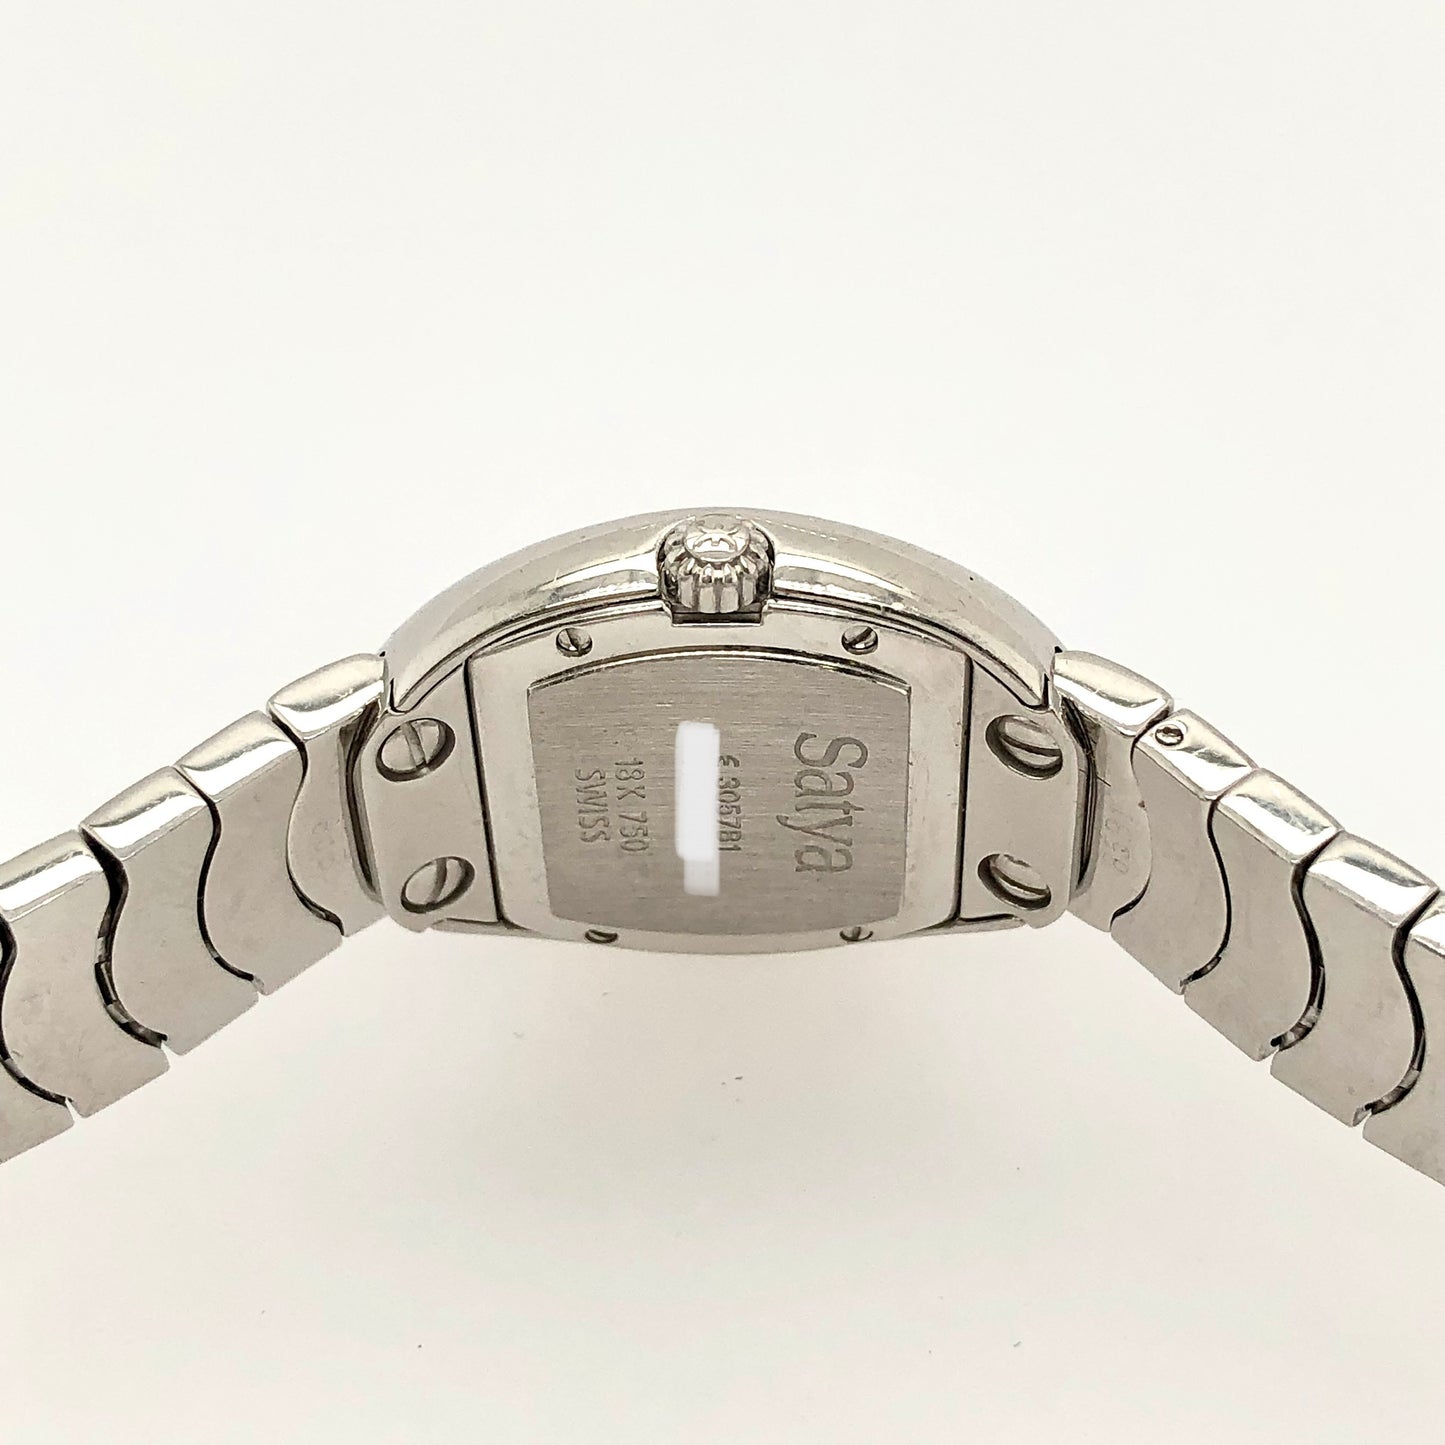 EBEL SATYA Quartz 22mm 18K White Gold Watch FACTORY Diamonds